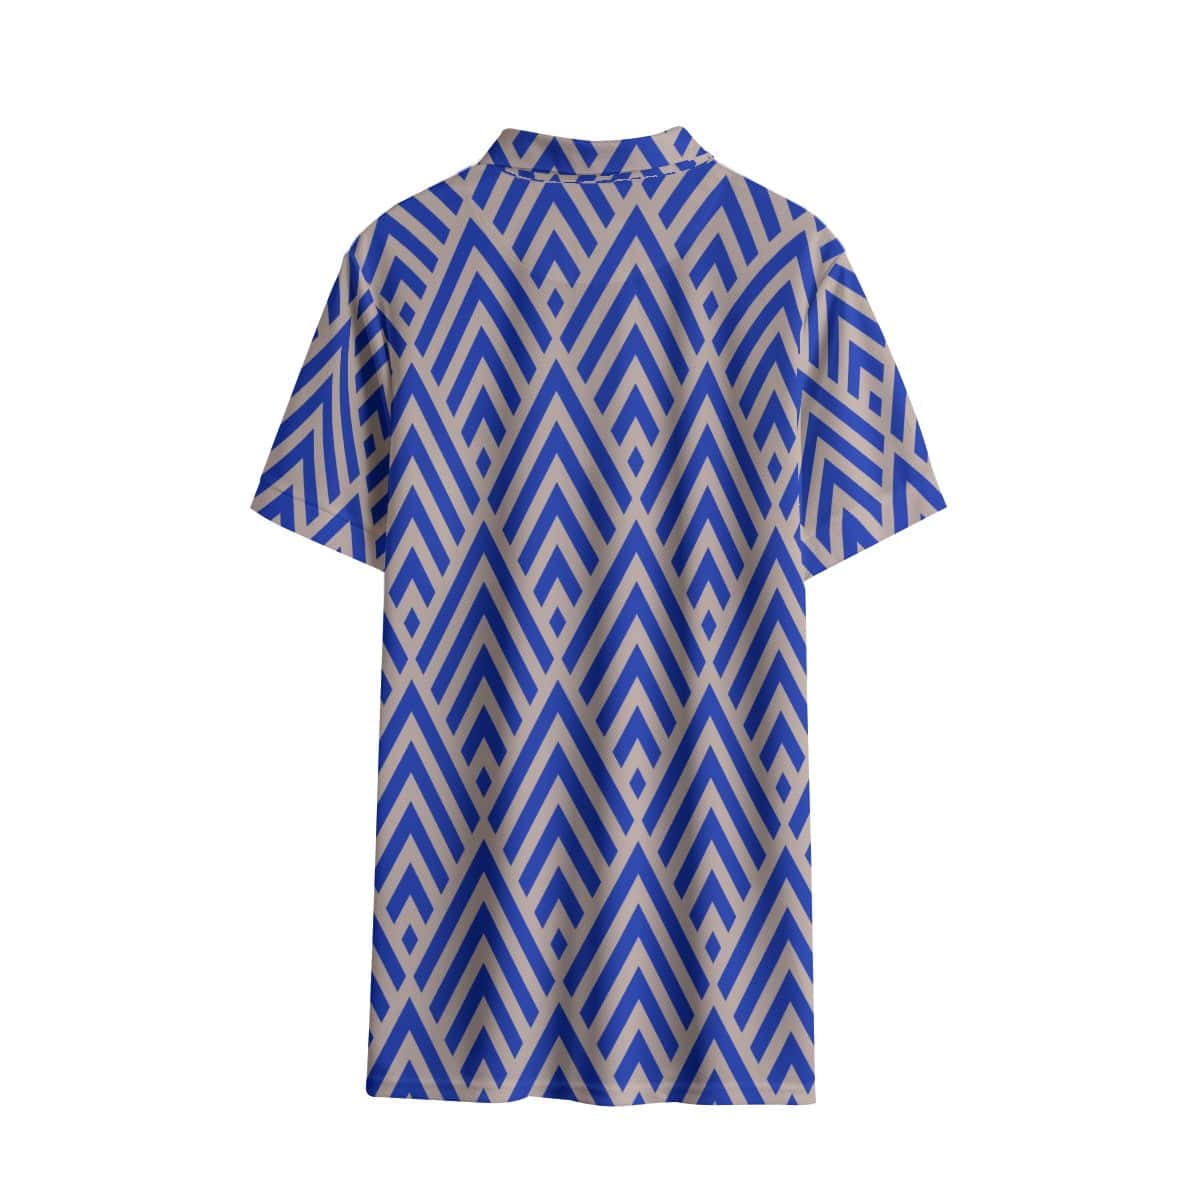 Yoycol Shirt Azul Azteca - Men's Polo Shirt | Birdseye